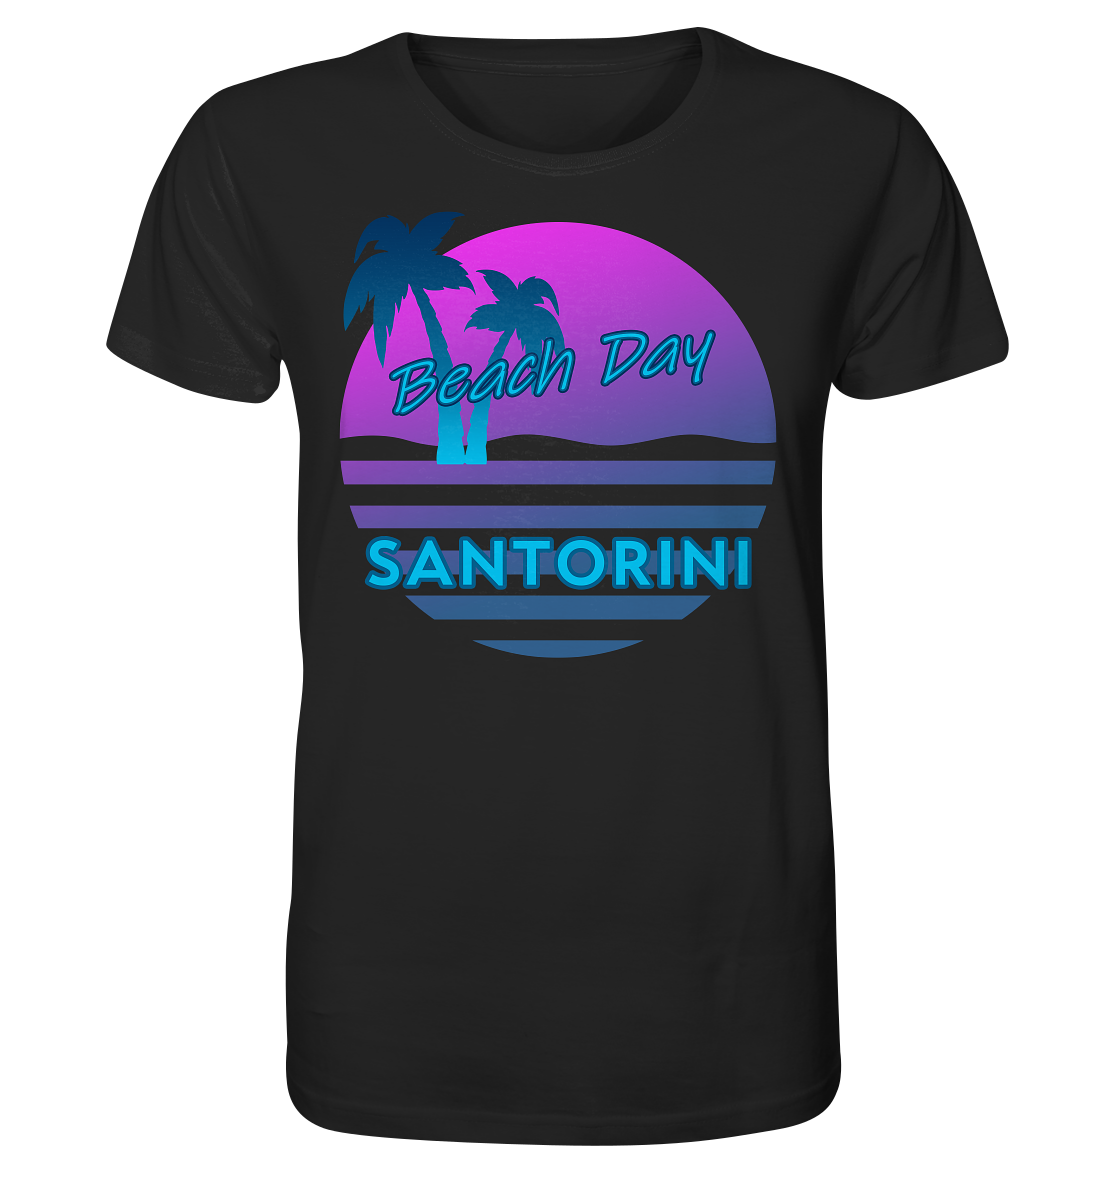 Beach Day Santorini - Organic Shirt